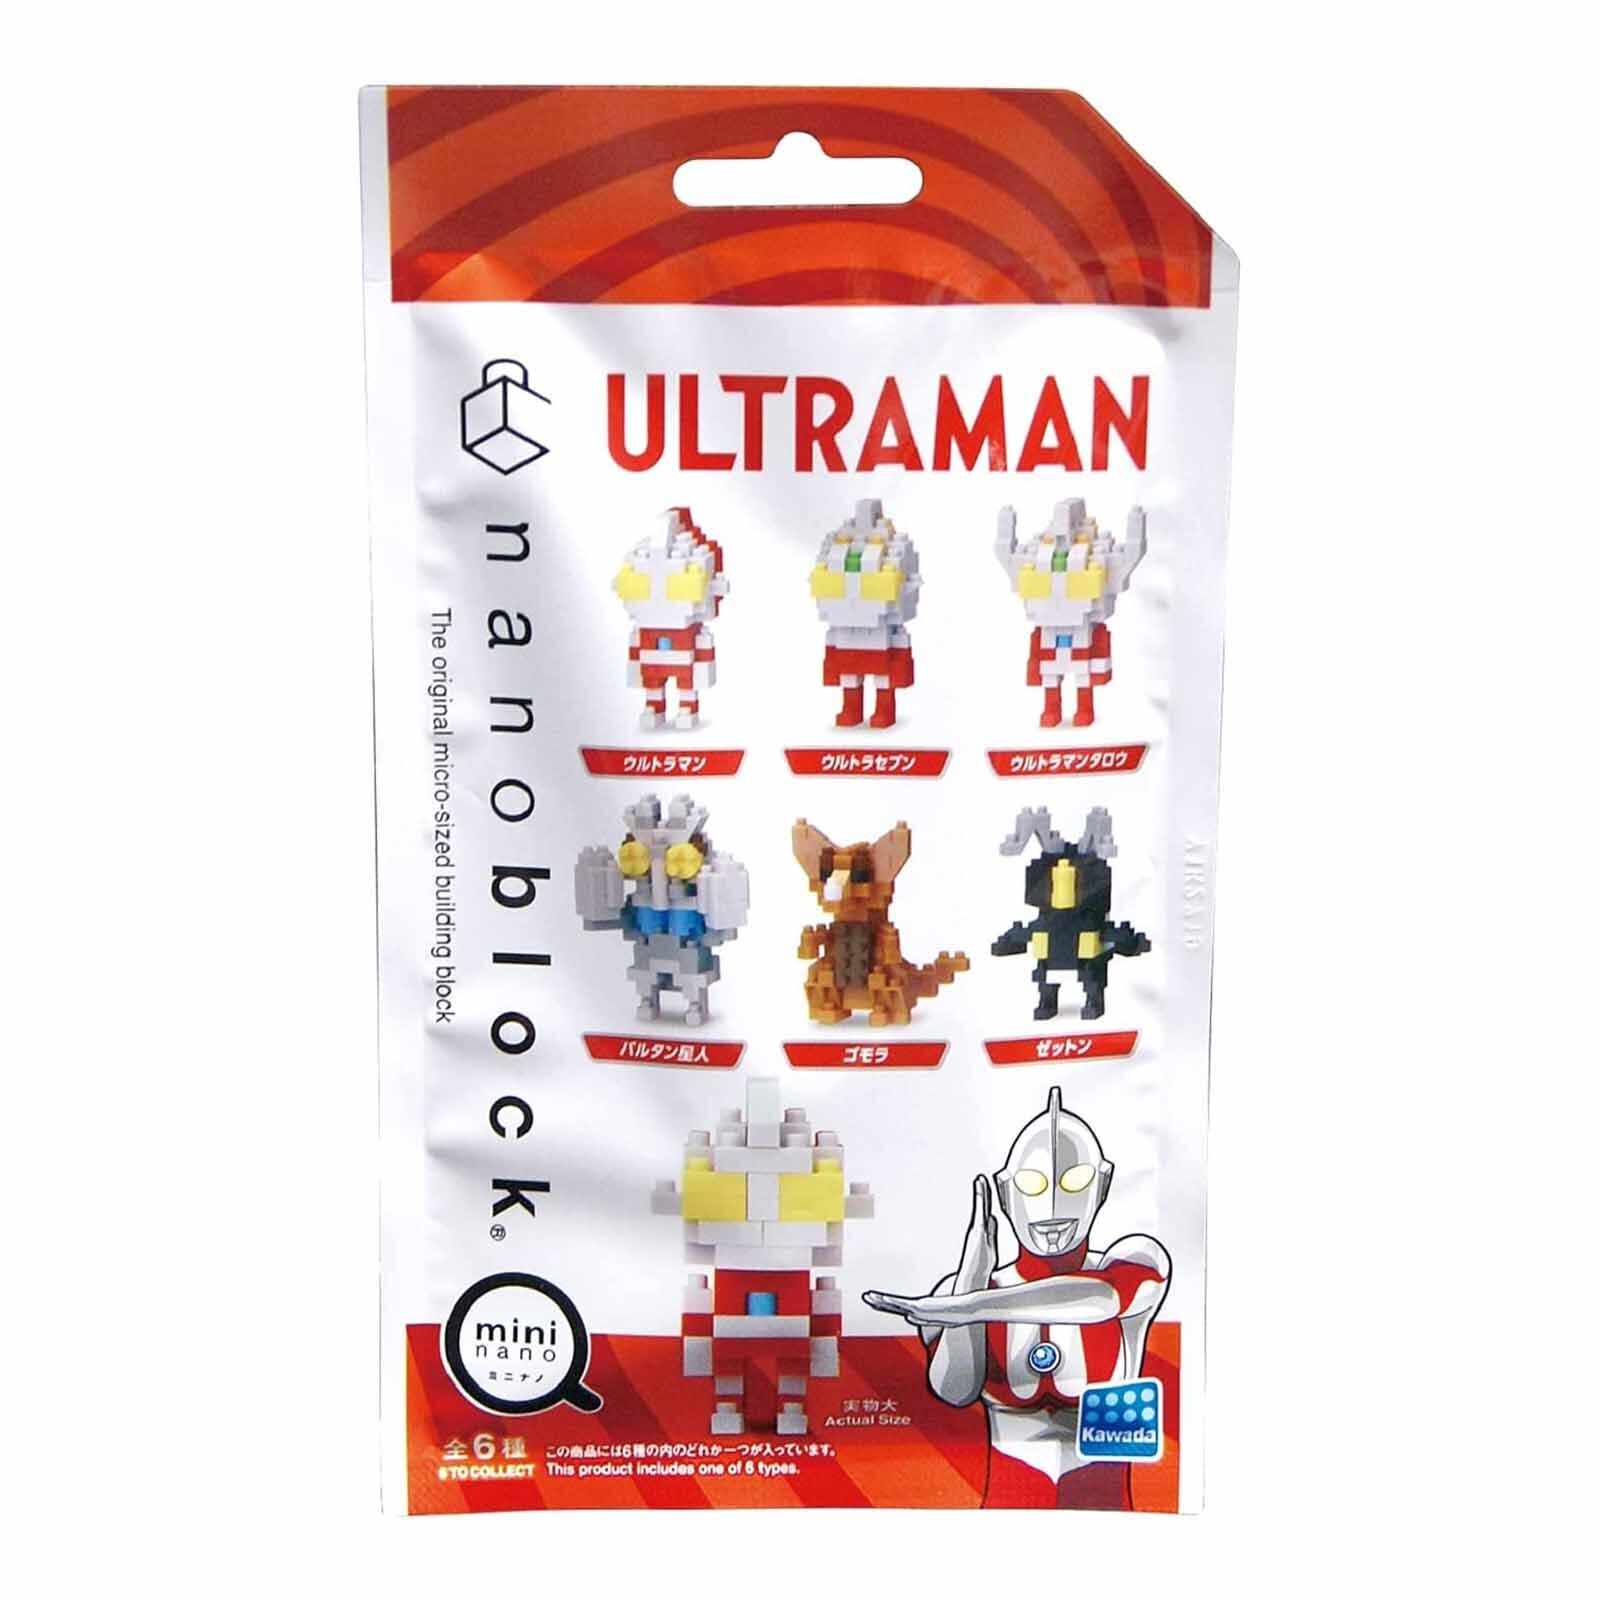 Nanoblock Ultraman Vol 1 Single Blind Bag Mininano Building Set NEW IN STOCK